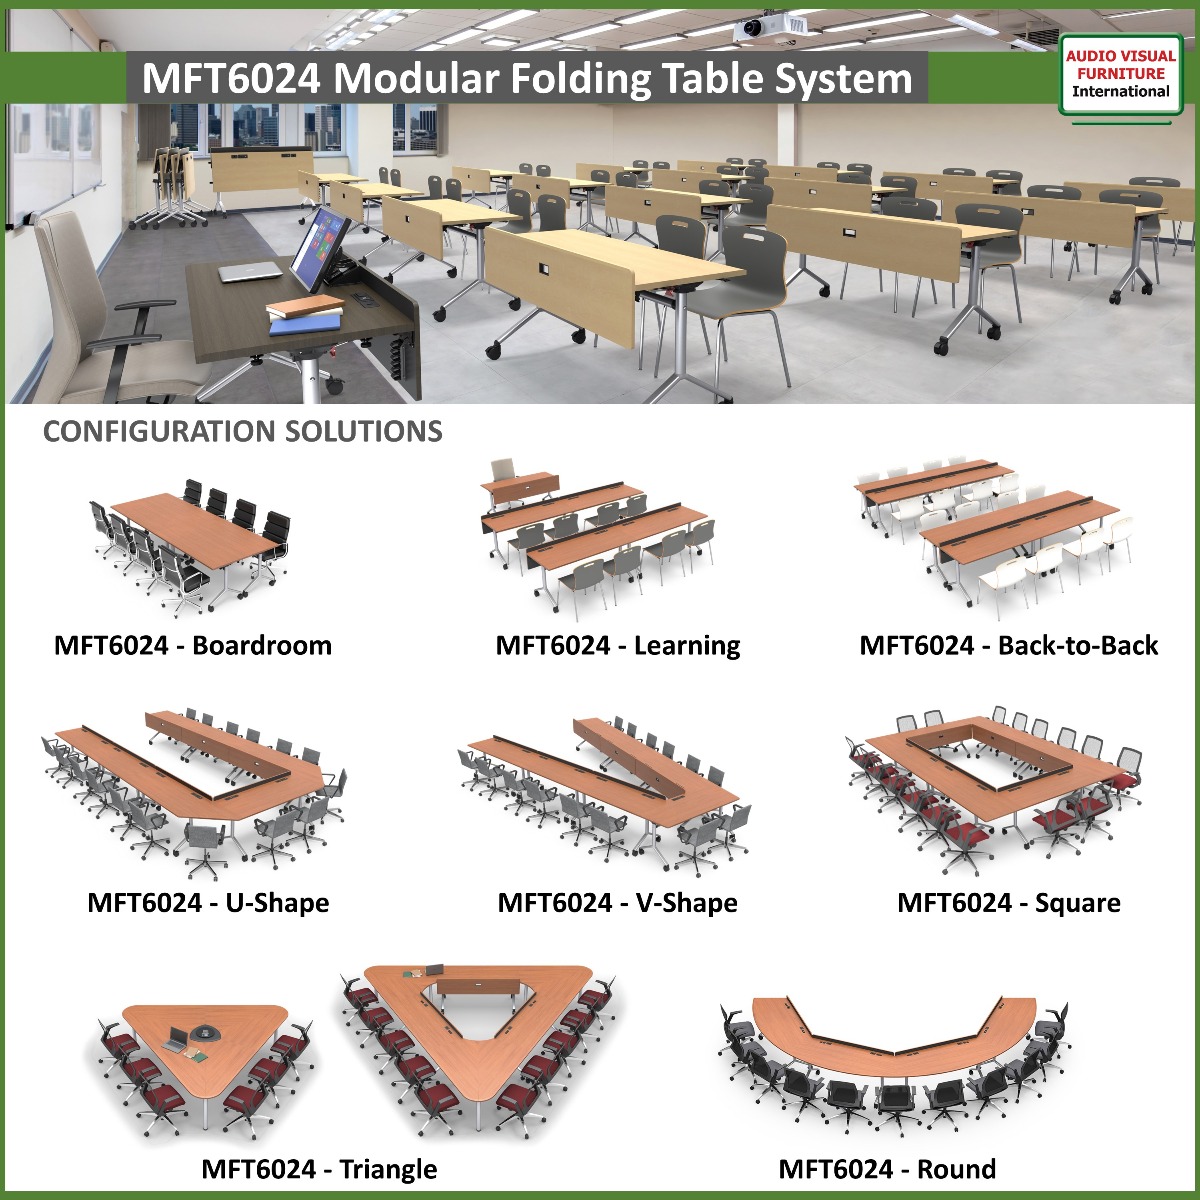 MFT6024 Modular Folding Table System